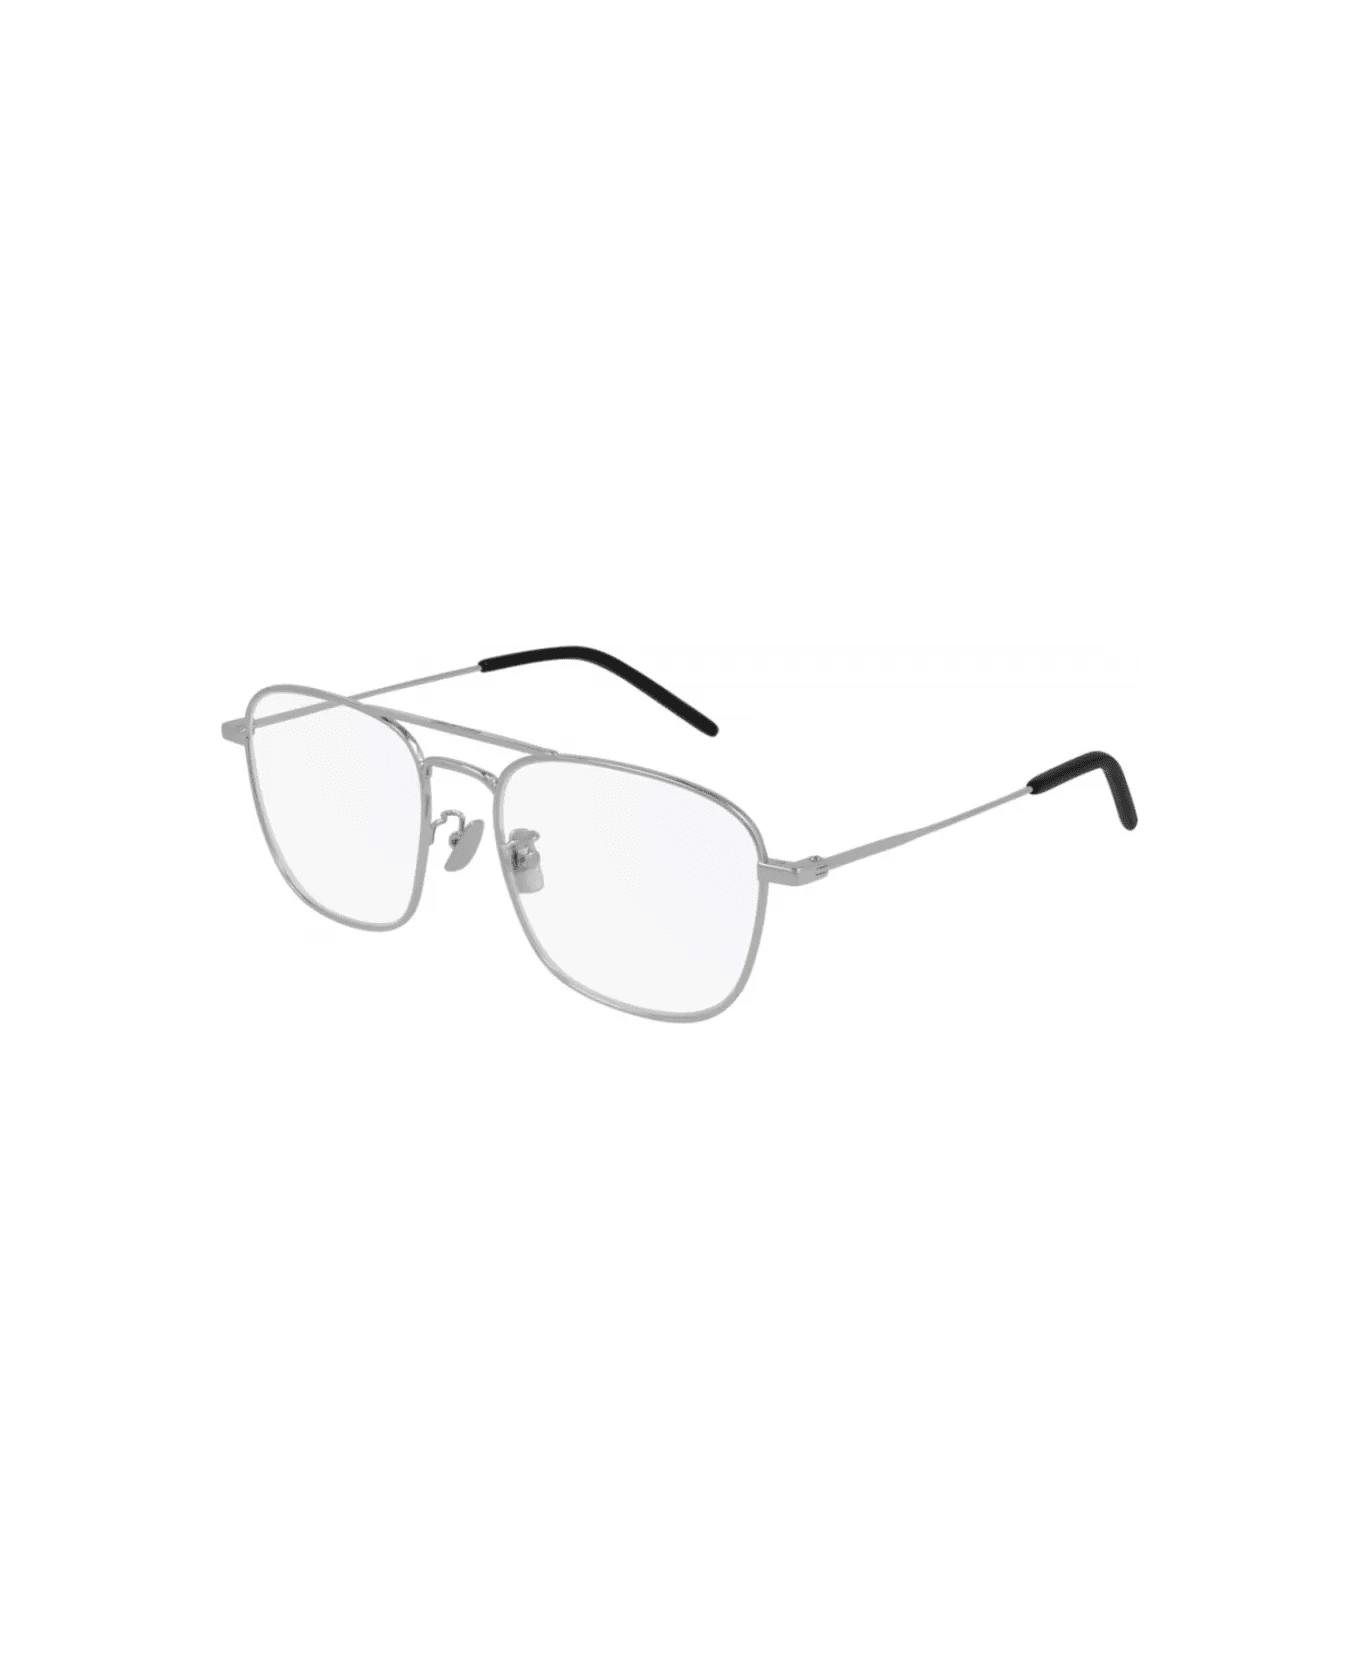 Saint Laurent Eyewear sl309 005 Glasses - Acciaio